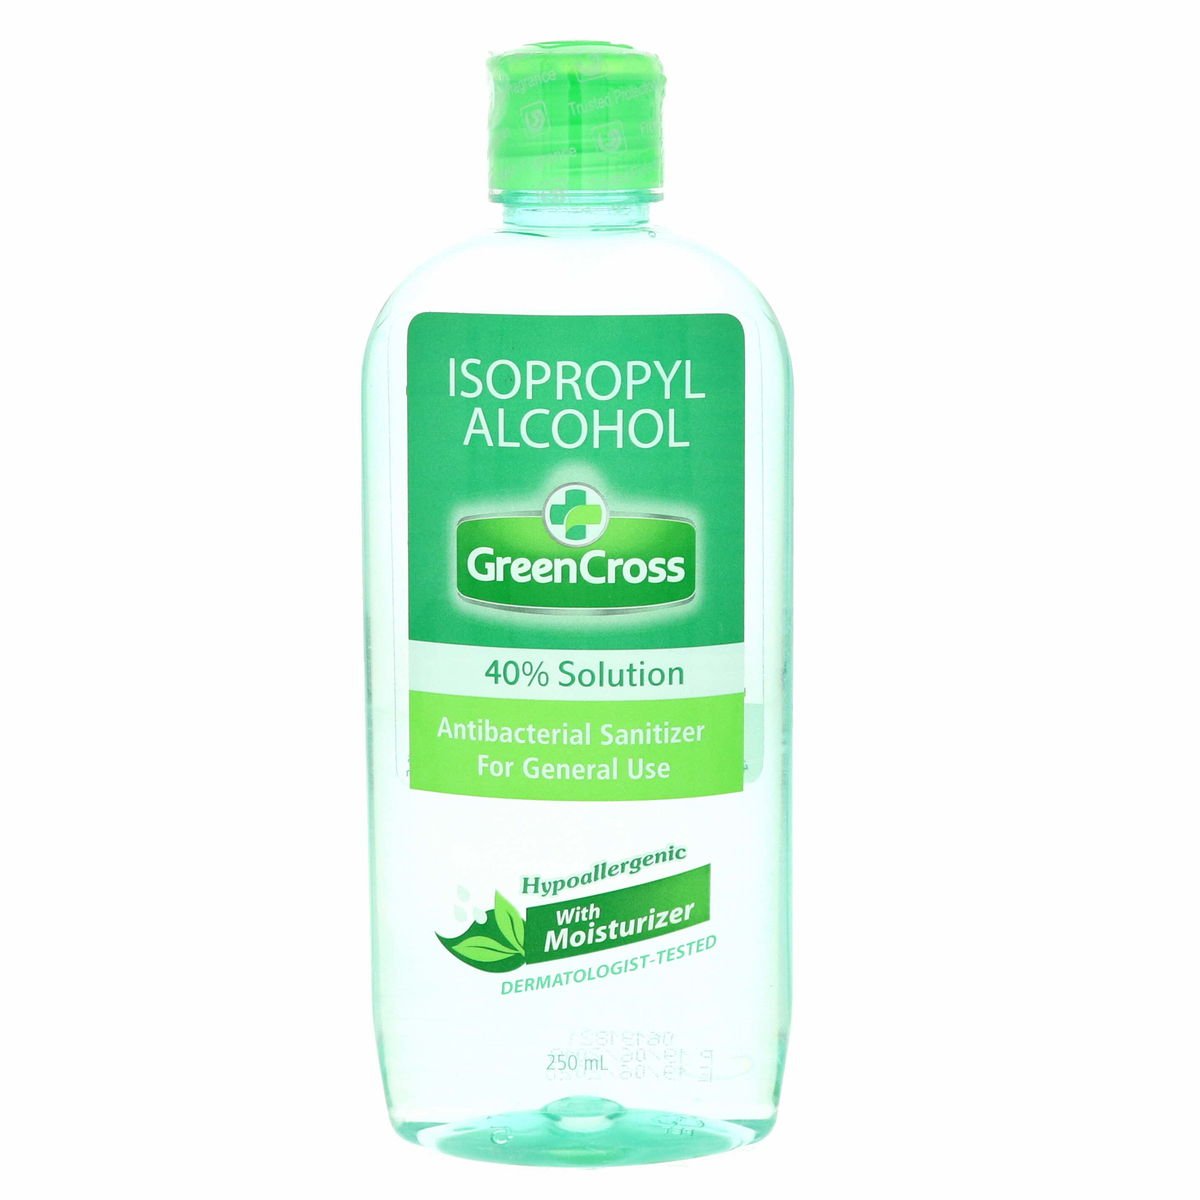 Green Cross Isopropyl Alcohol Antibacterial Sanitizer 250 ml